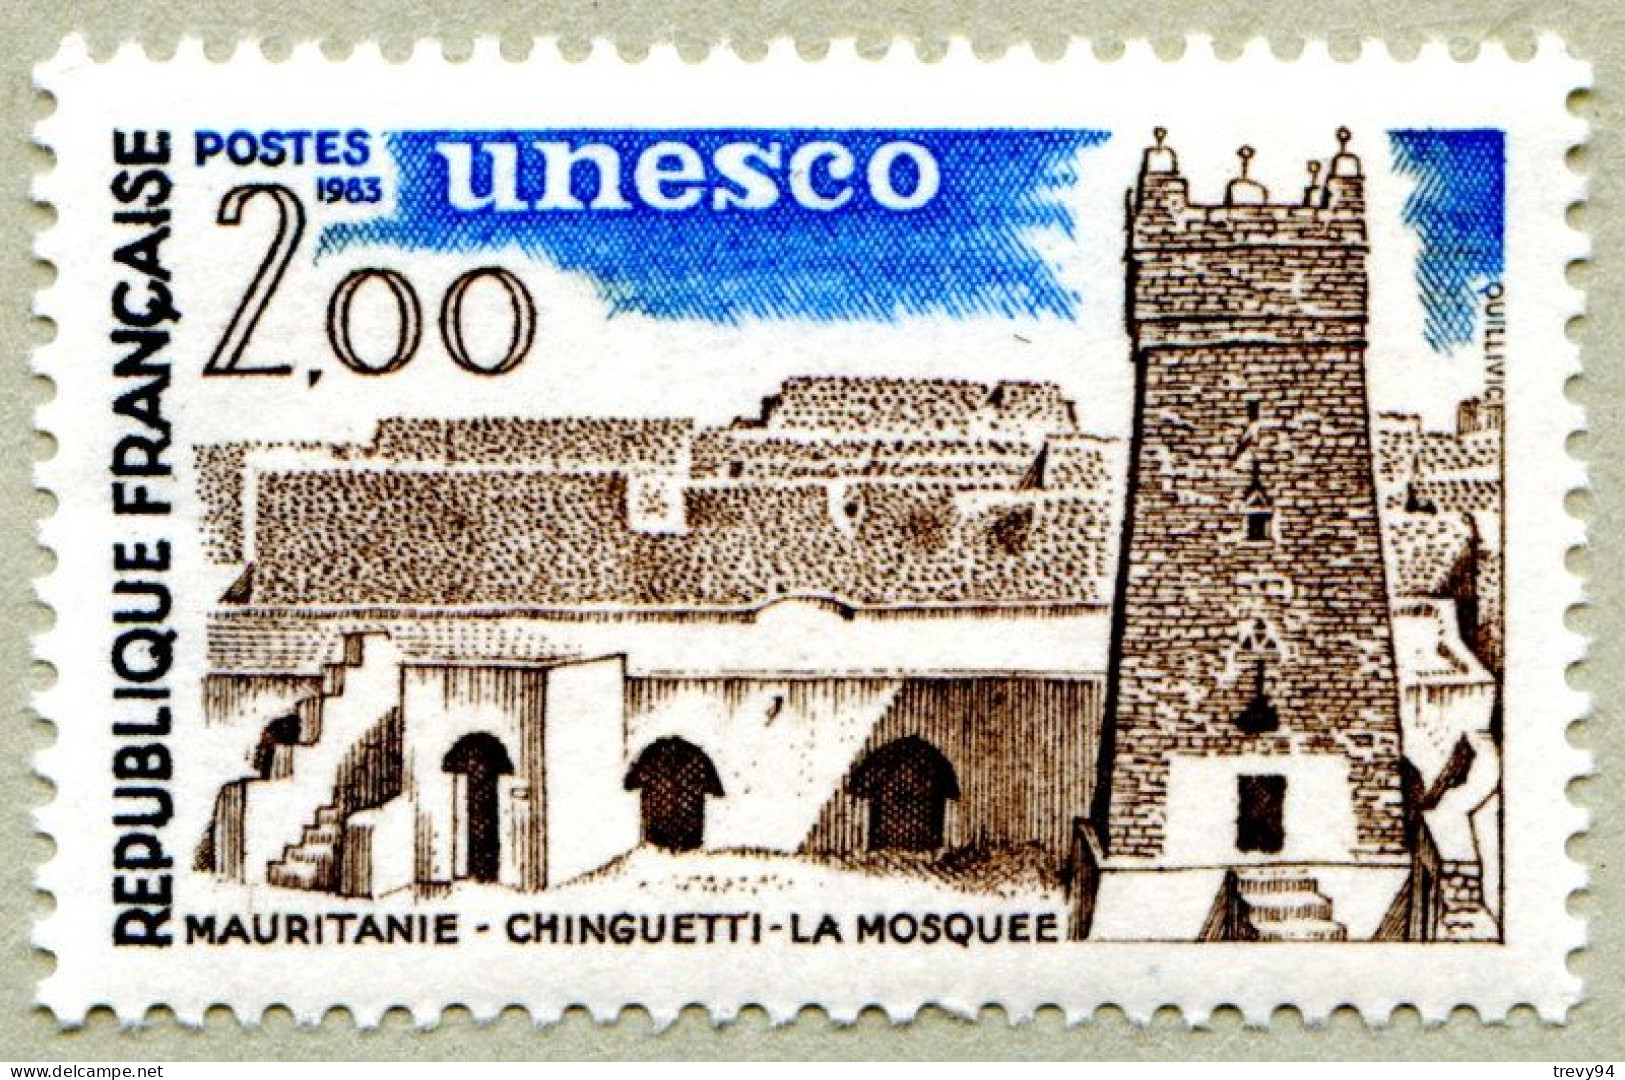 Timbre De Service 1983 - UNESCO Mauritanie Chinguetti - La Mosquée - N° 75 Neuf - Nuovi